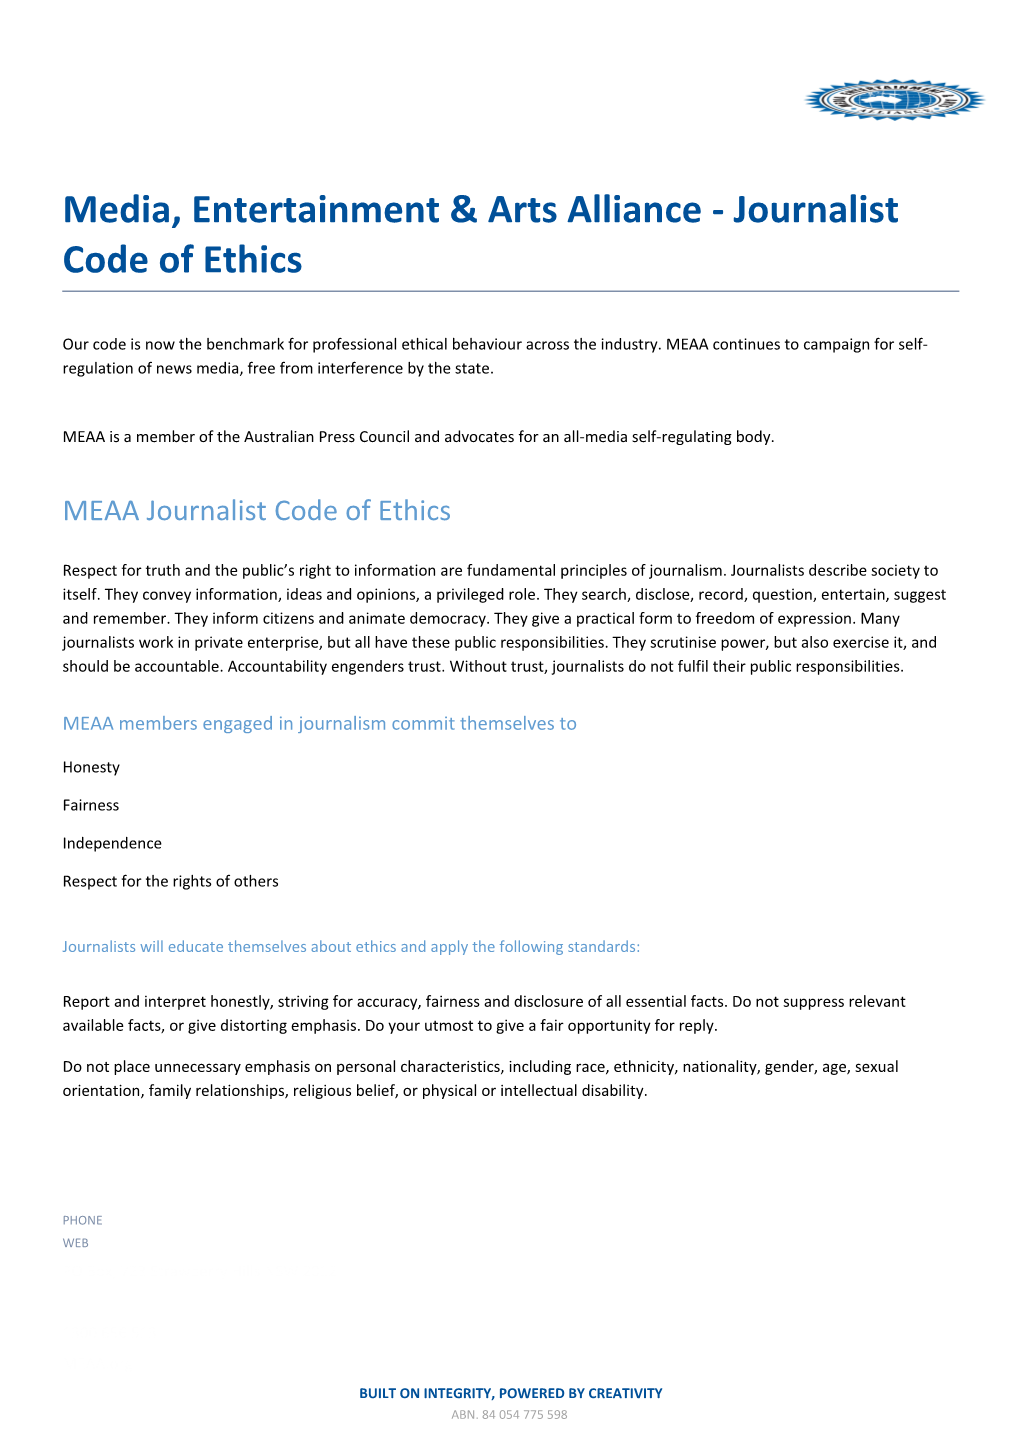 Media, Entertainment & Arts Alliance - Journalist Code of Ethics